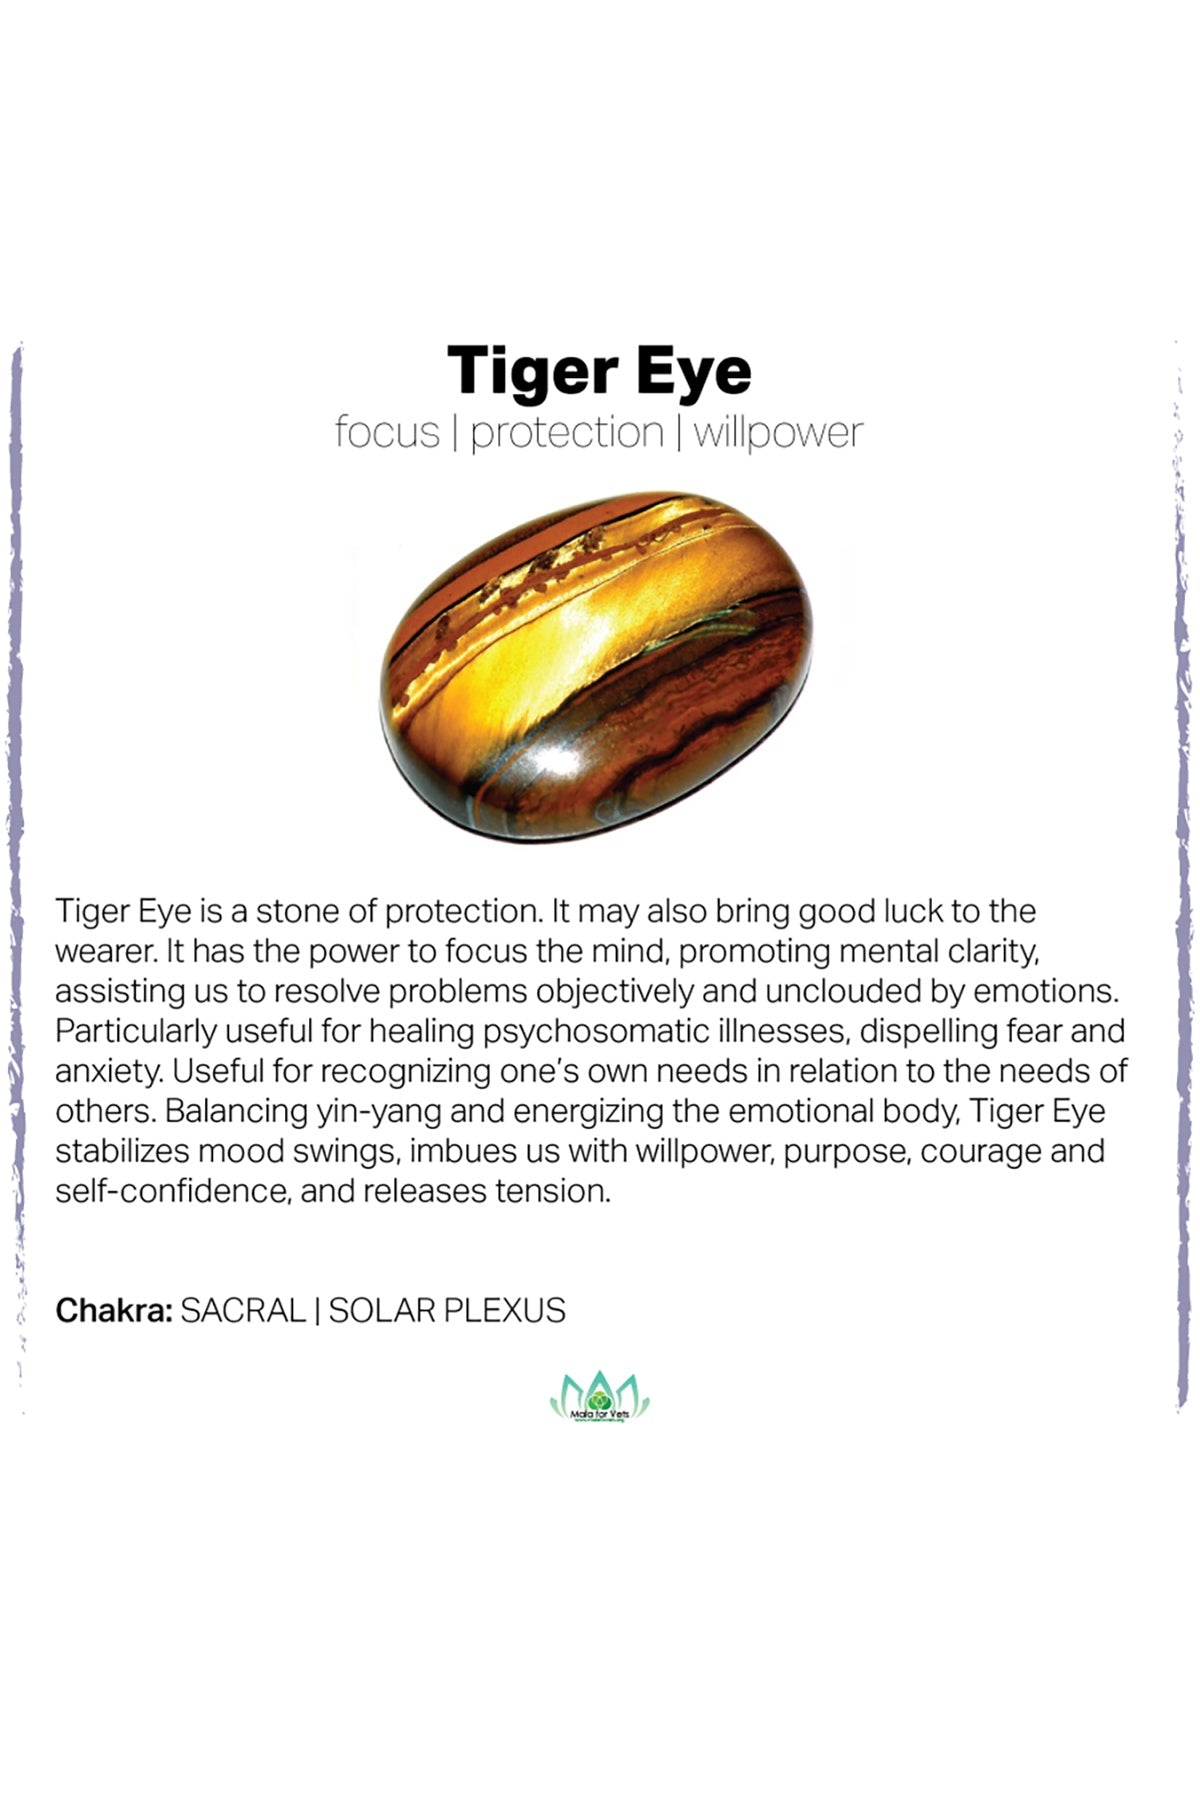 Silver Plated '+++' Tiger's Eye Stone Skinny Healing Bracelet